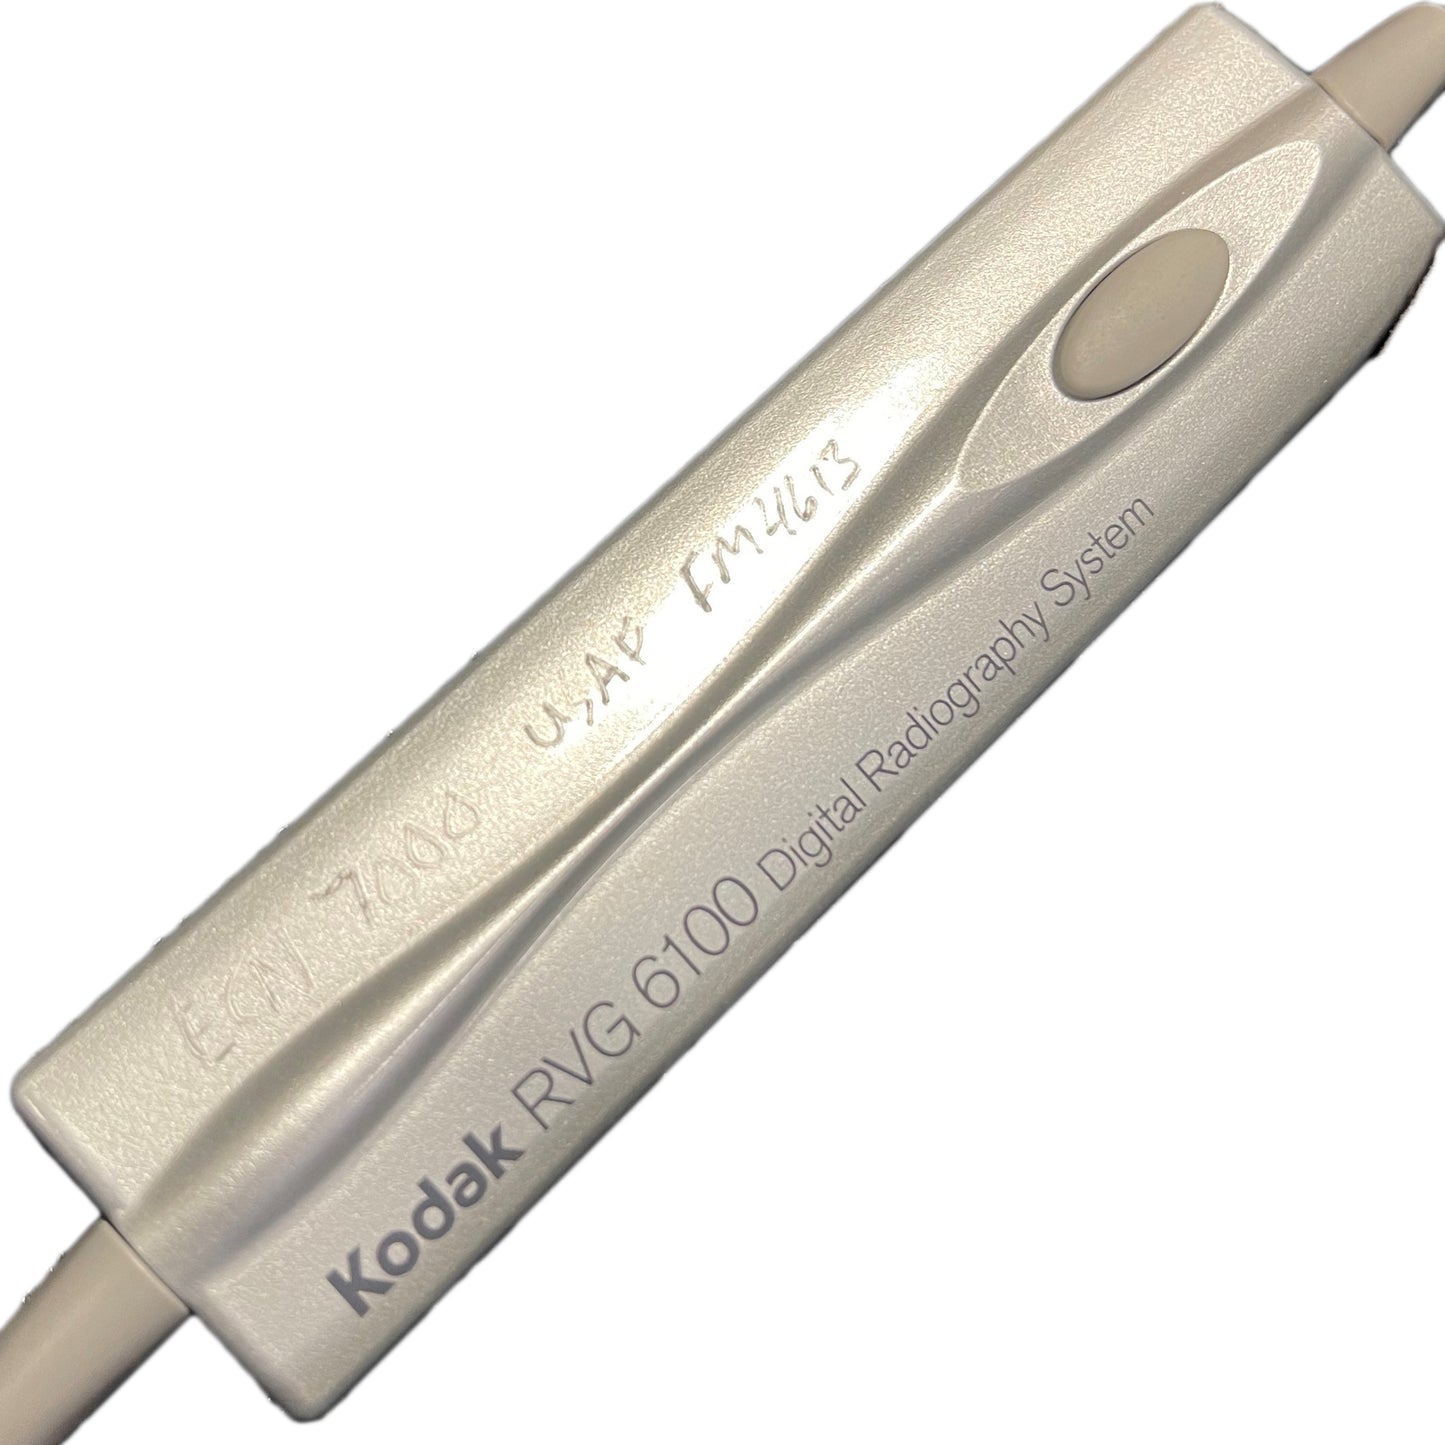 Kodak Carestream Dental RVG 6100 Digital X-Ray Sensor Size 2 - USED (works perfectly) - USA Supply